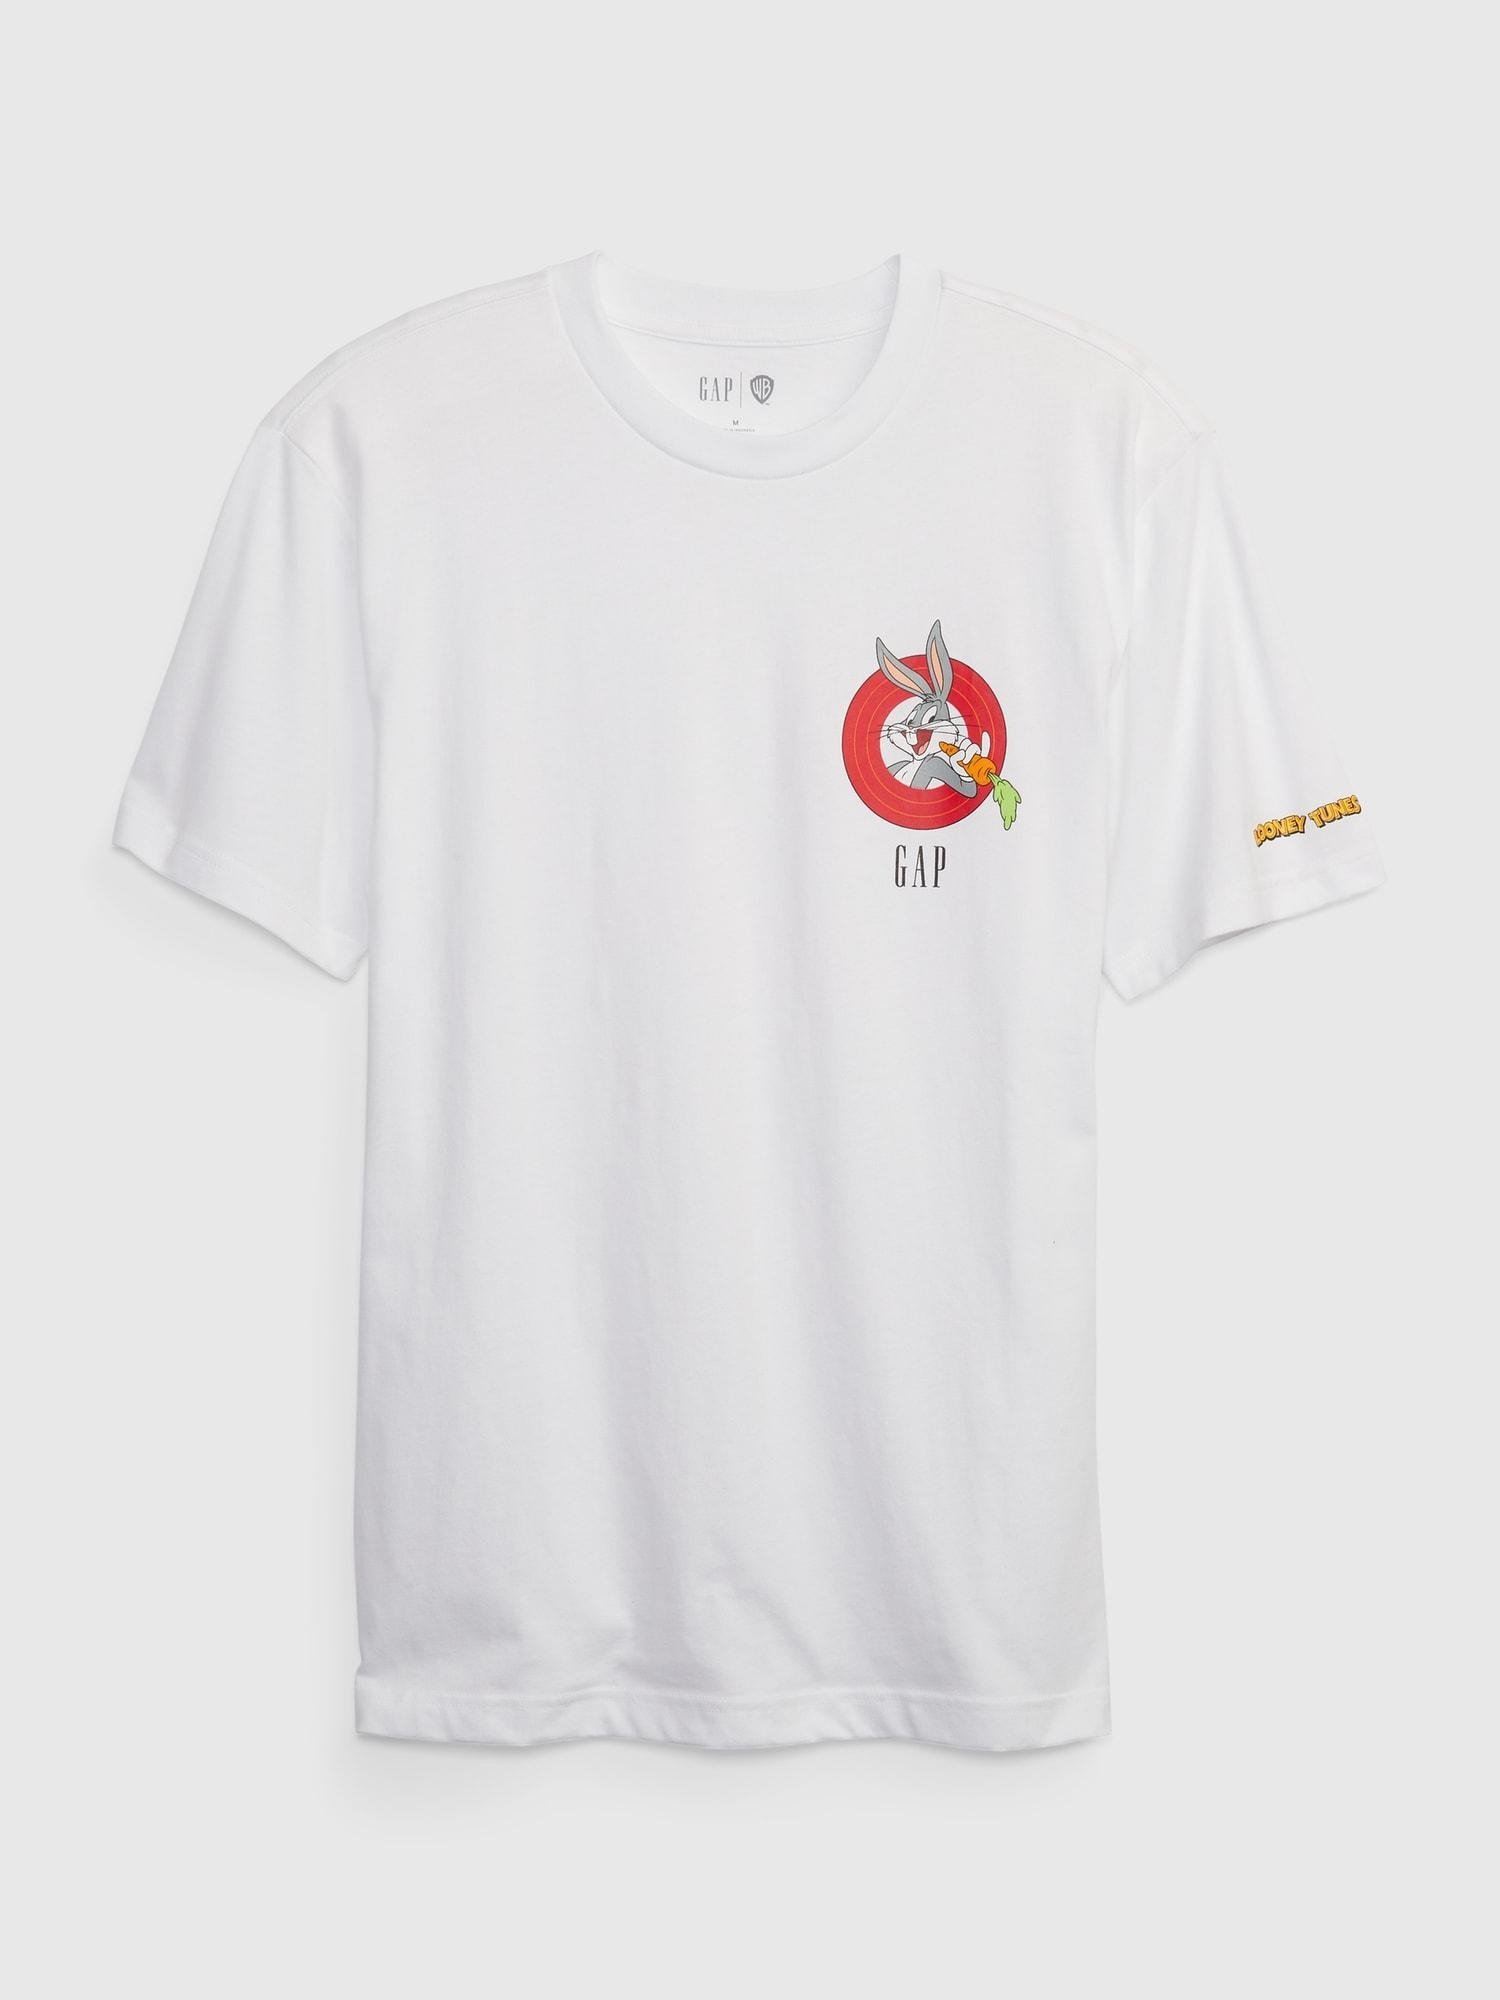 Gap x WB™ Looney Tunes Grafik Baskılı T-Shirt product image